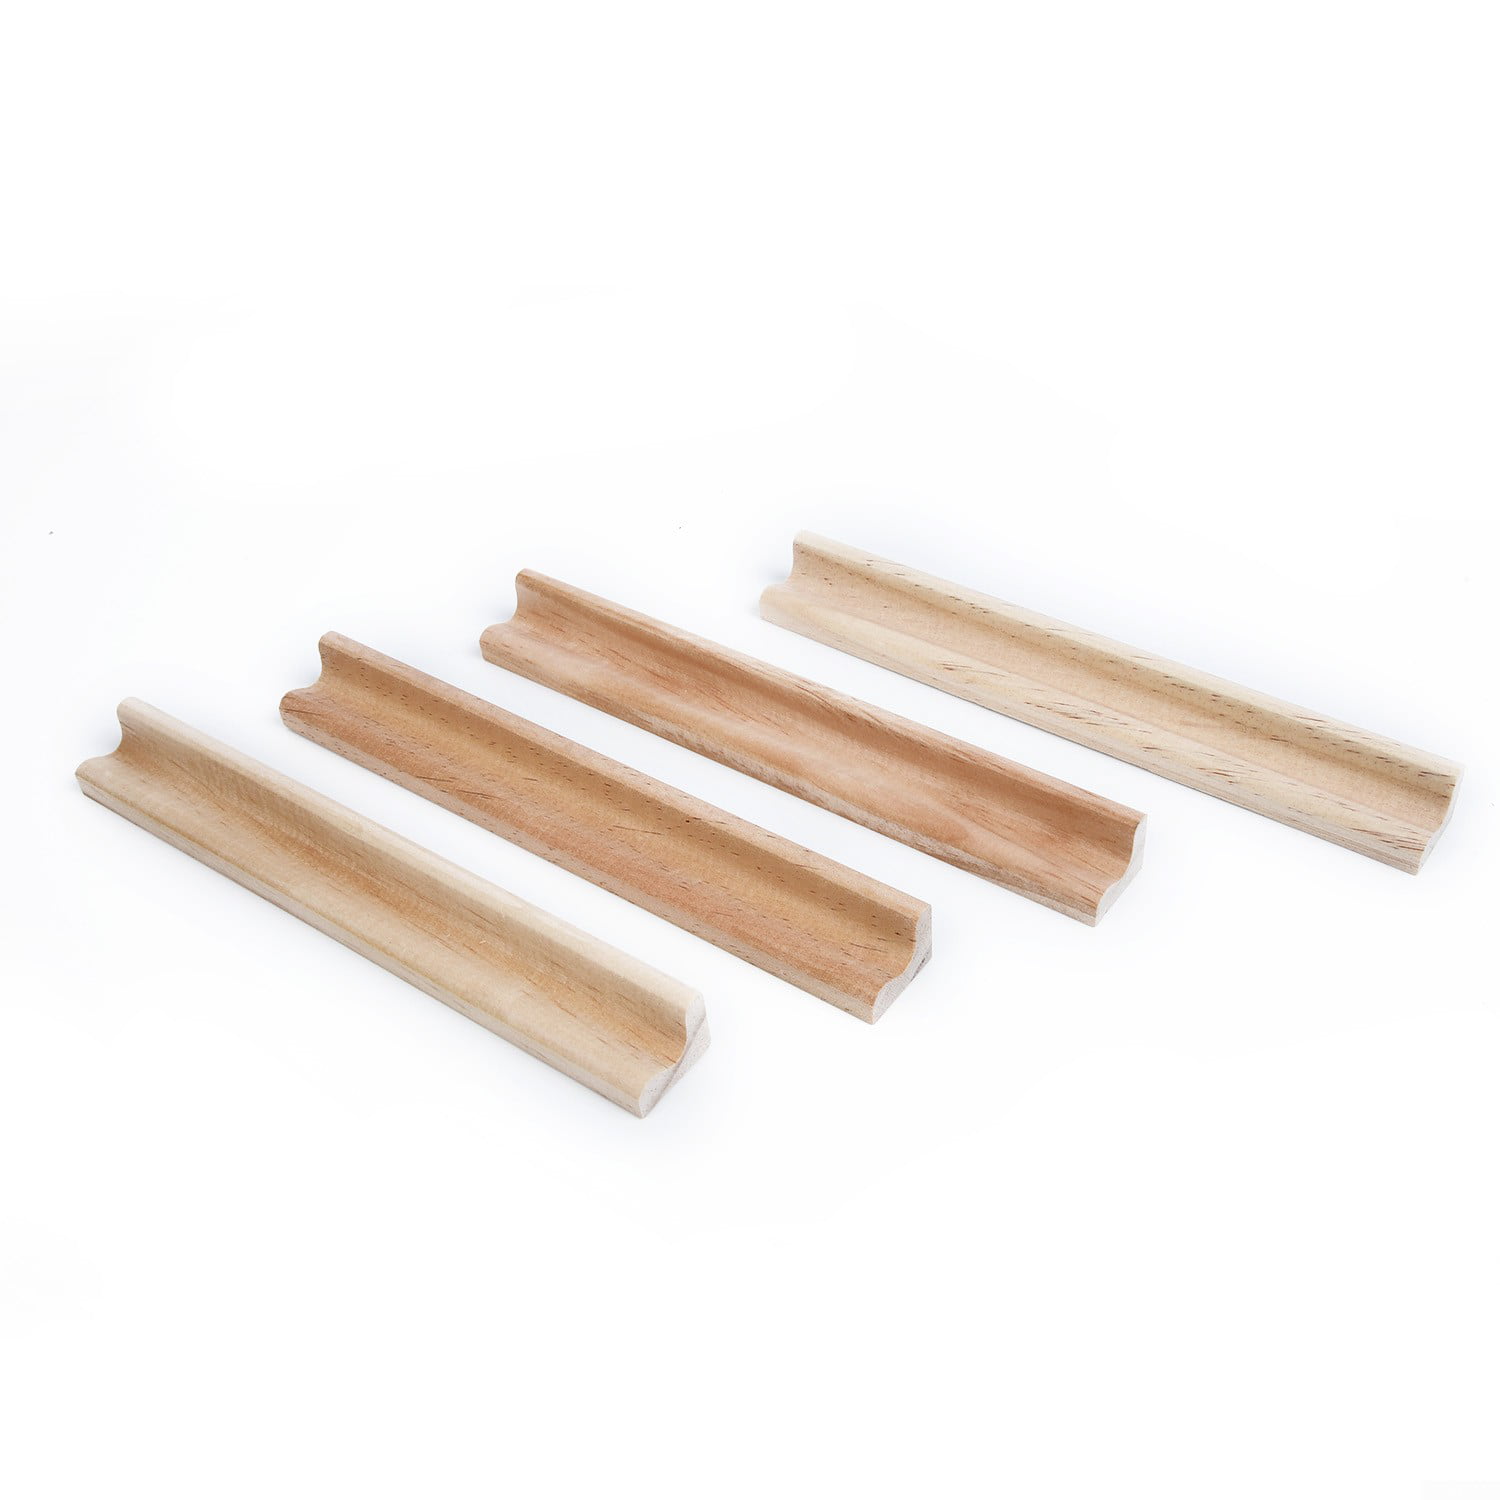 4pcs Wood Scrabble Tile Rack Wooden Replacement Stand Letter Holder Set Craft 